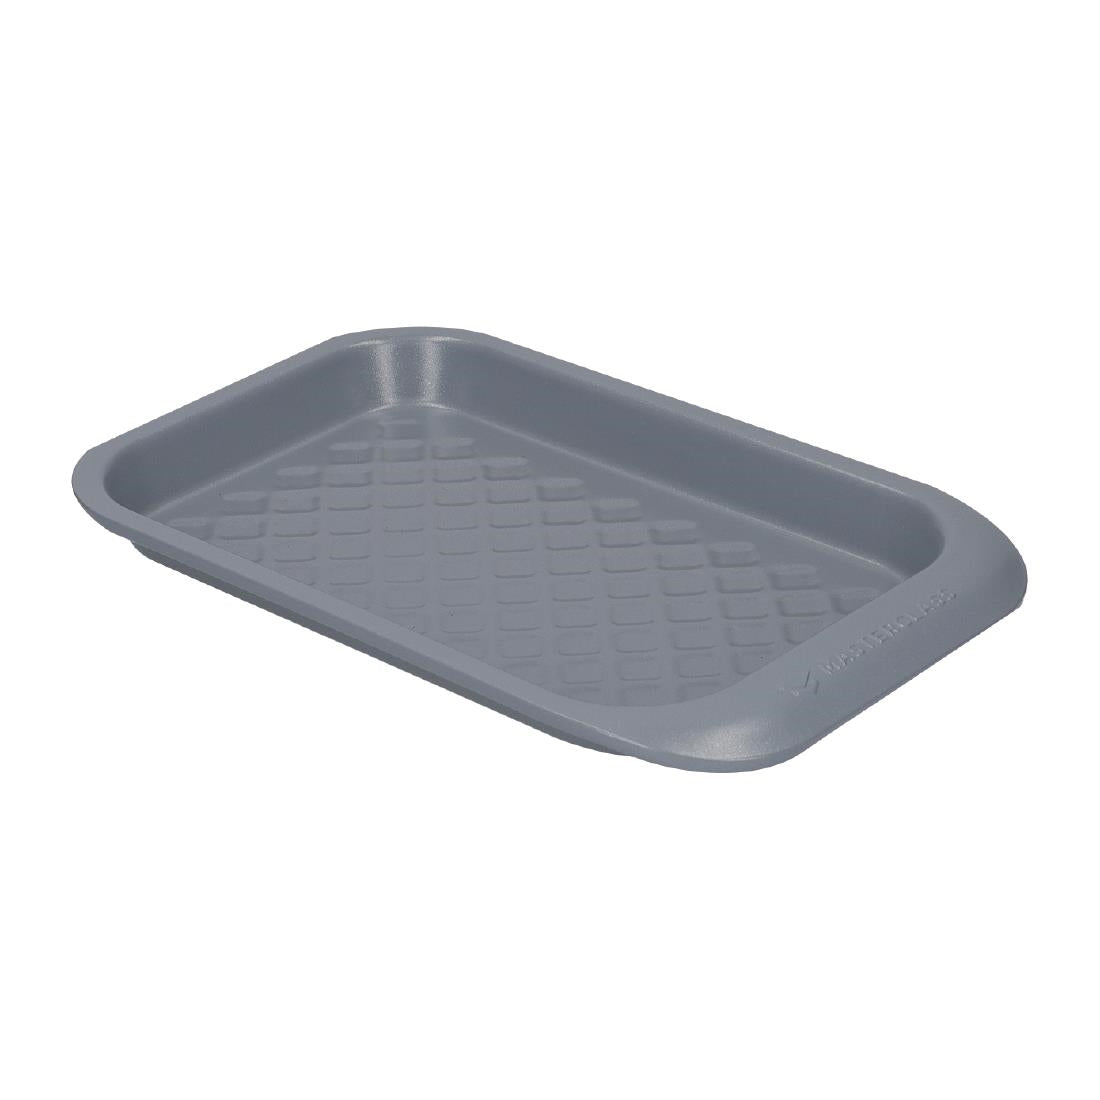 FS211 MasterClass Smart Ceramic Non-Stick Individual Baking Tray - 24x15x2.5cm JD Catering Equipment Solutions Ltd